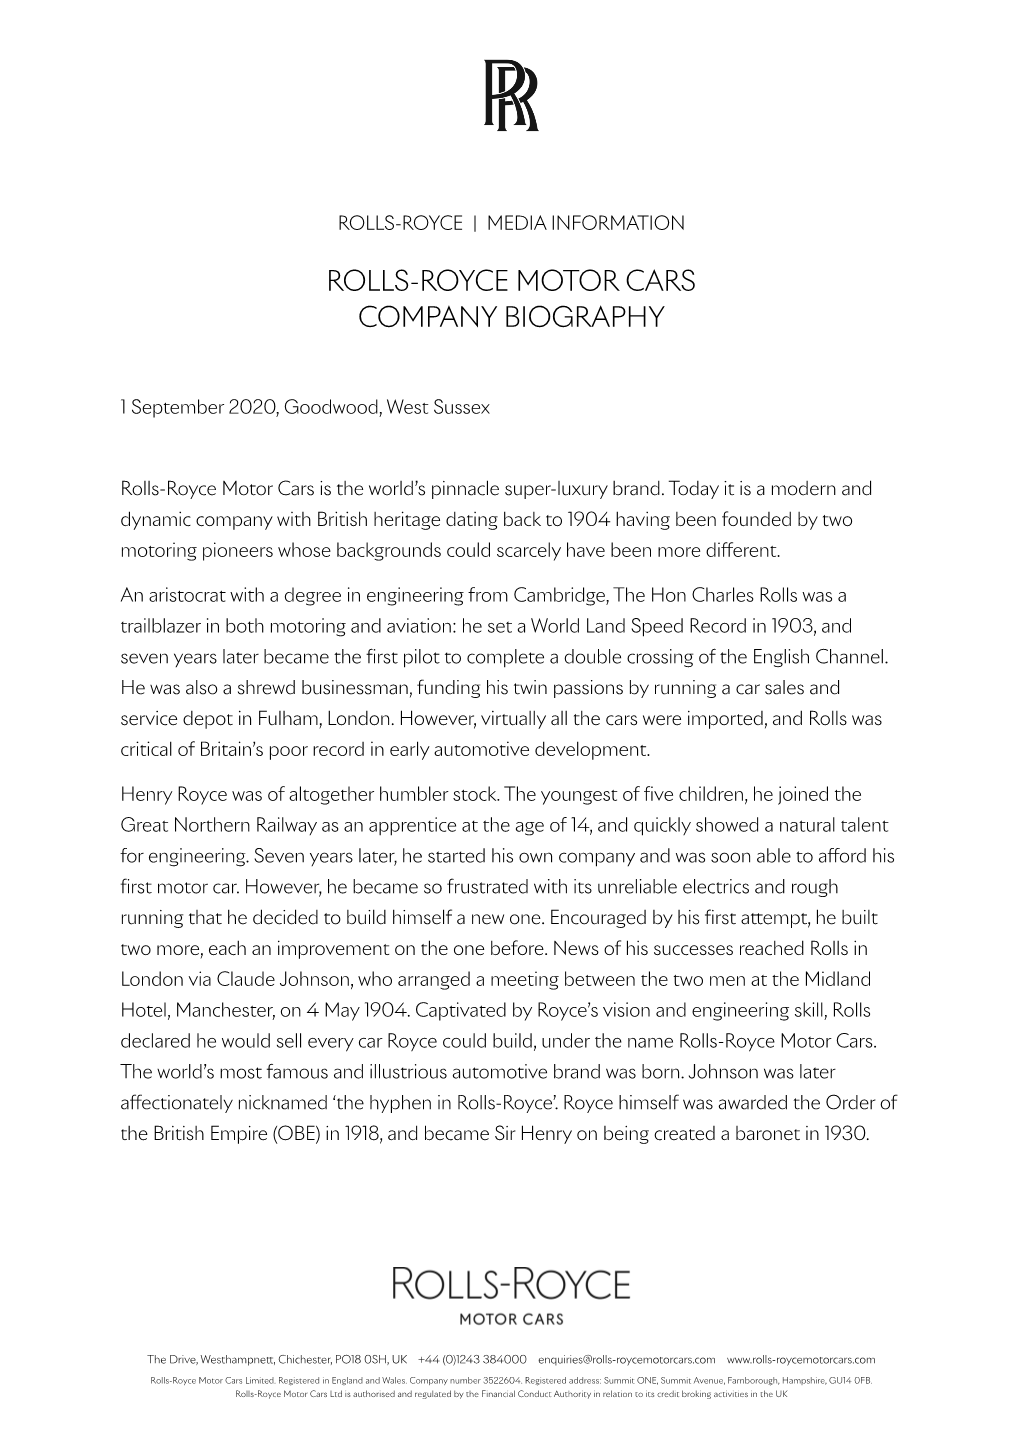 Rolls-Royce Motor Cars Biography